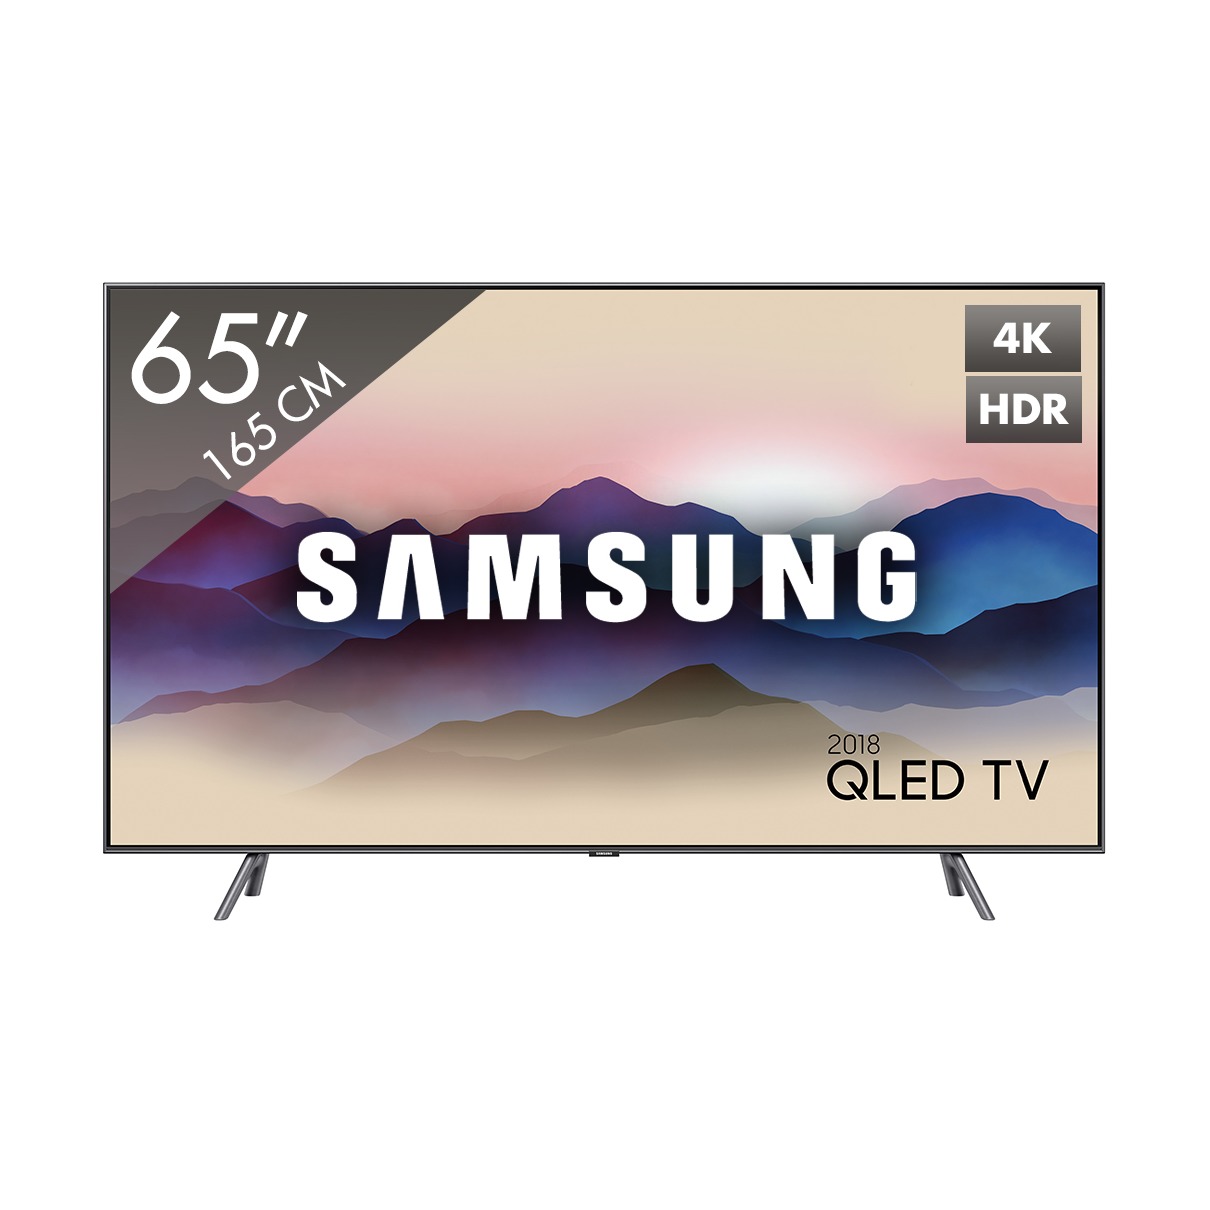 Telefoonleader - Samsung QE65Q8D QLED TV 2018